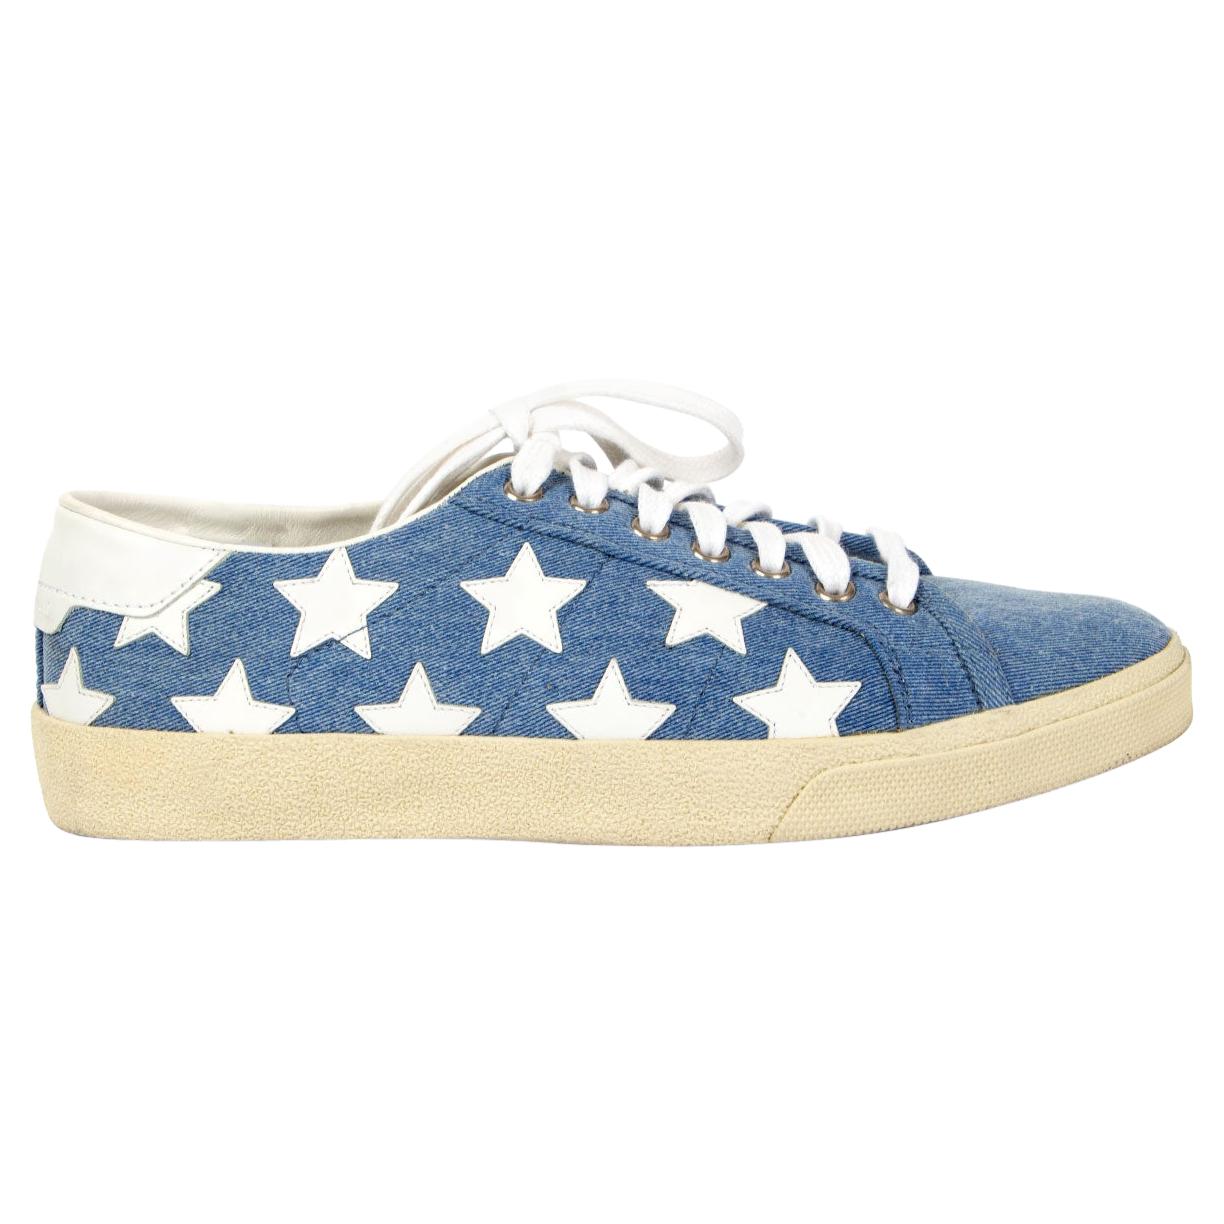 SAINT LAURENT blaue Denim CLASSIC COURT STAR Sneakers Schuhe 39,5